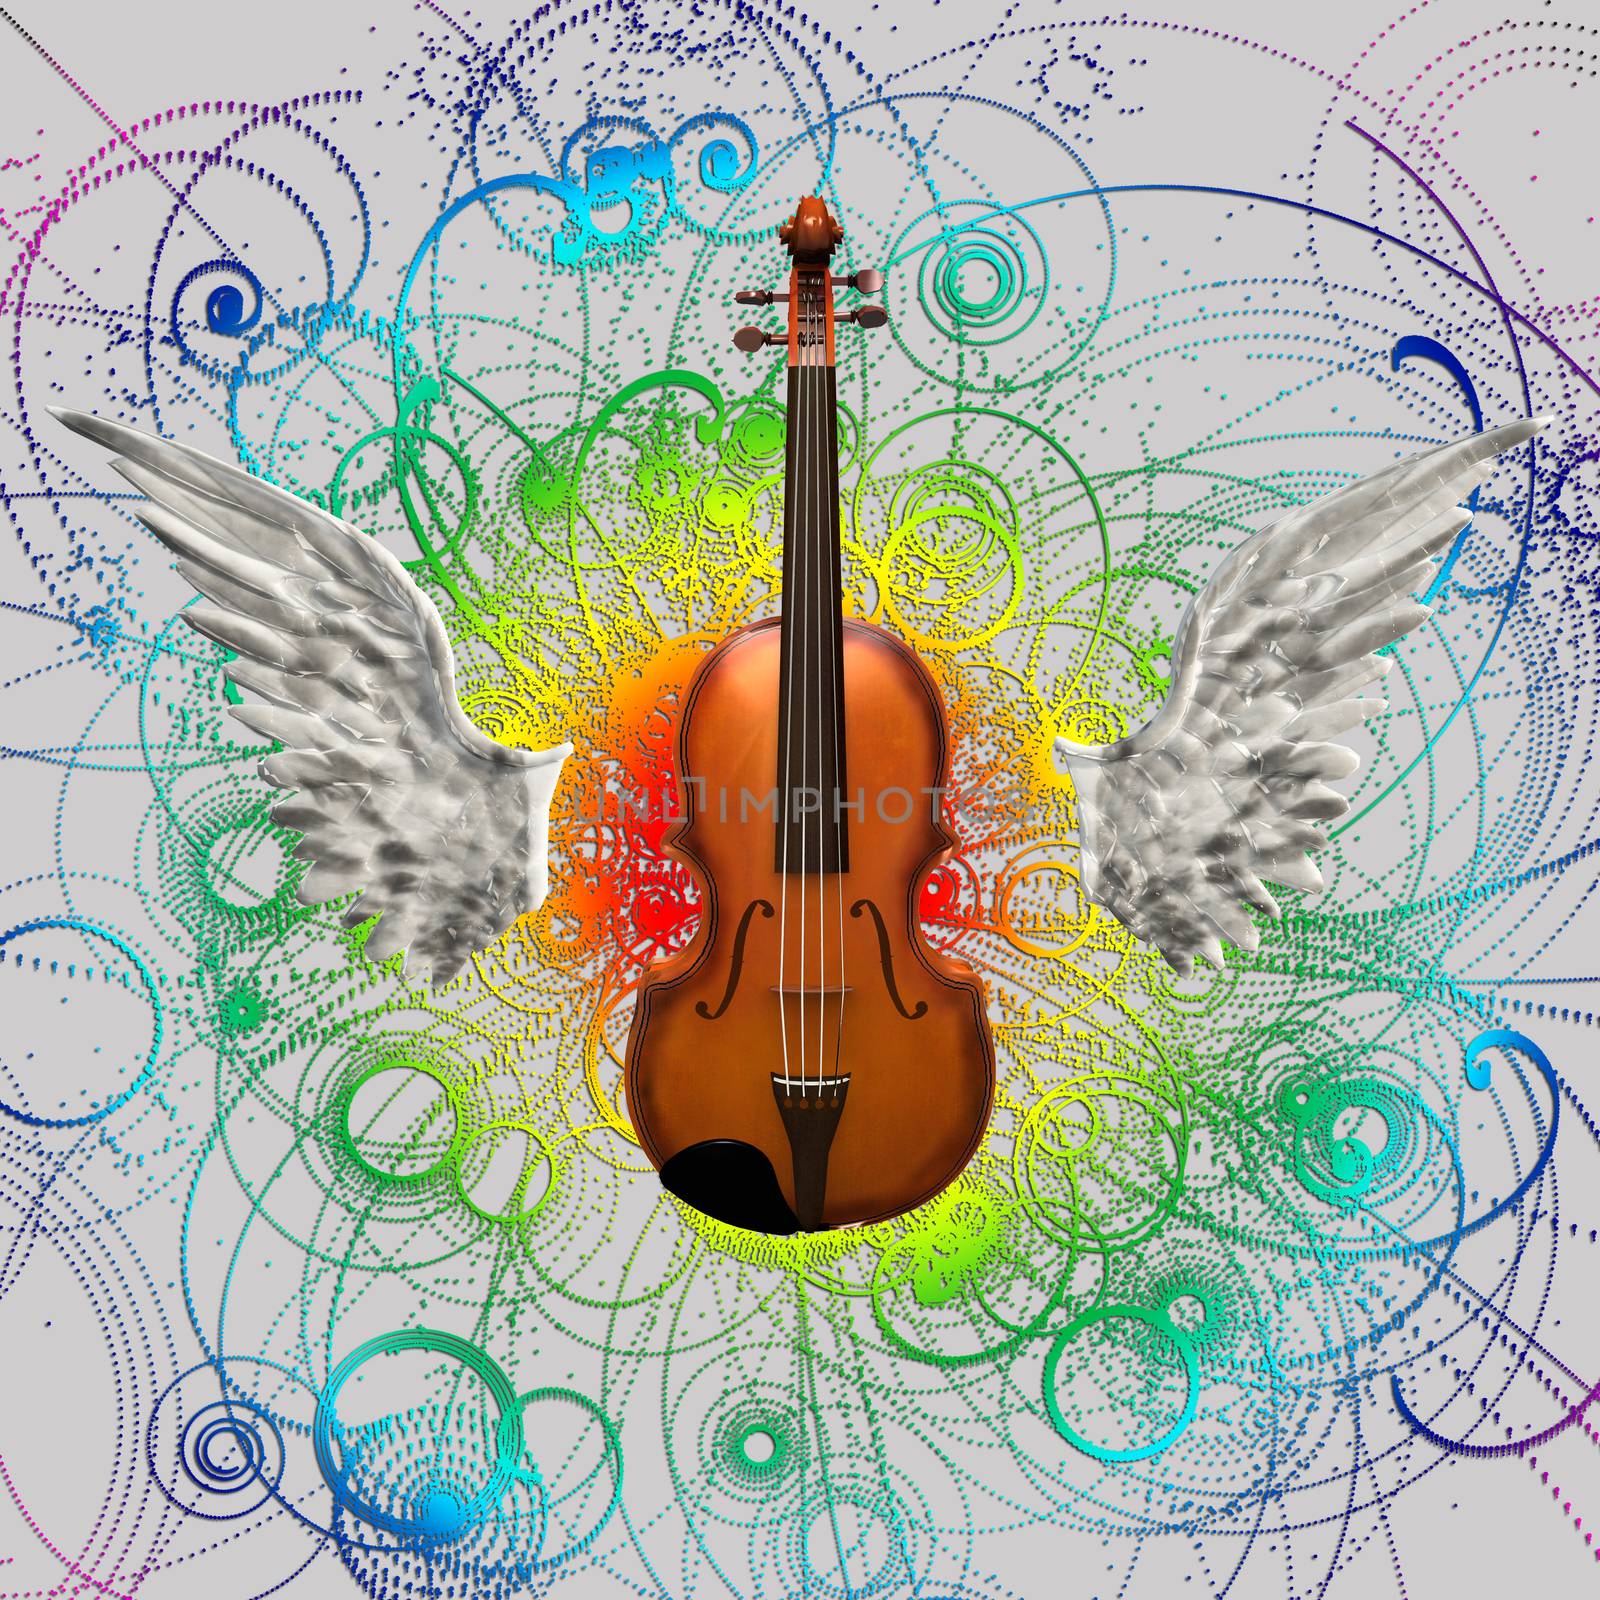 Violin Design by applesstock